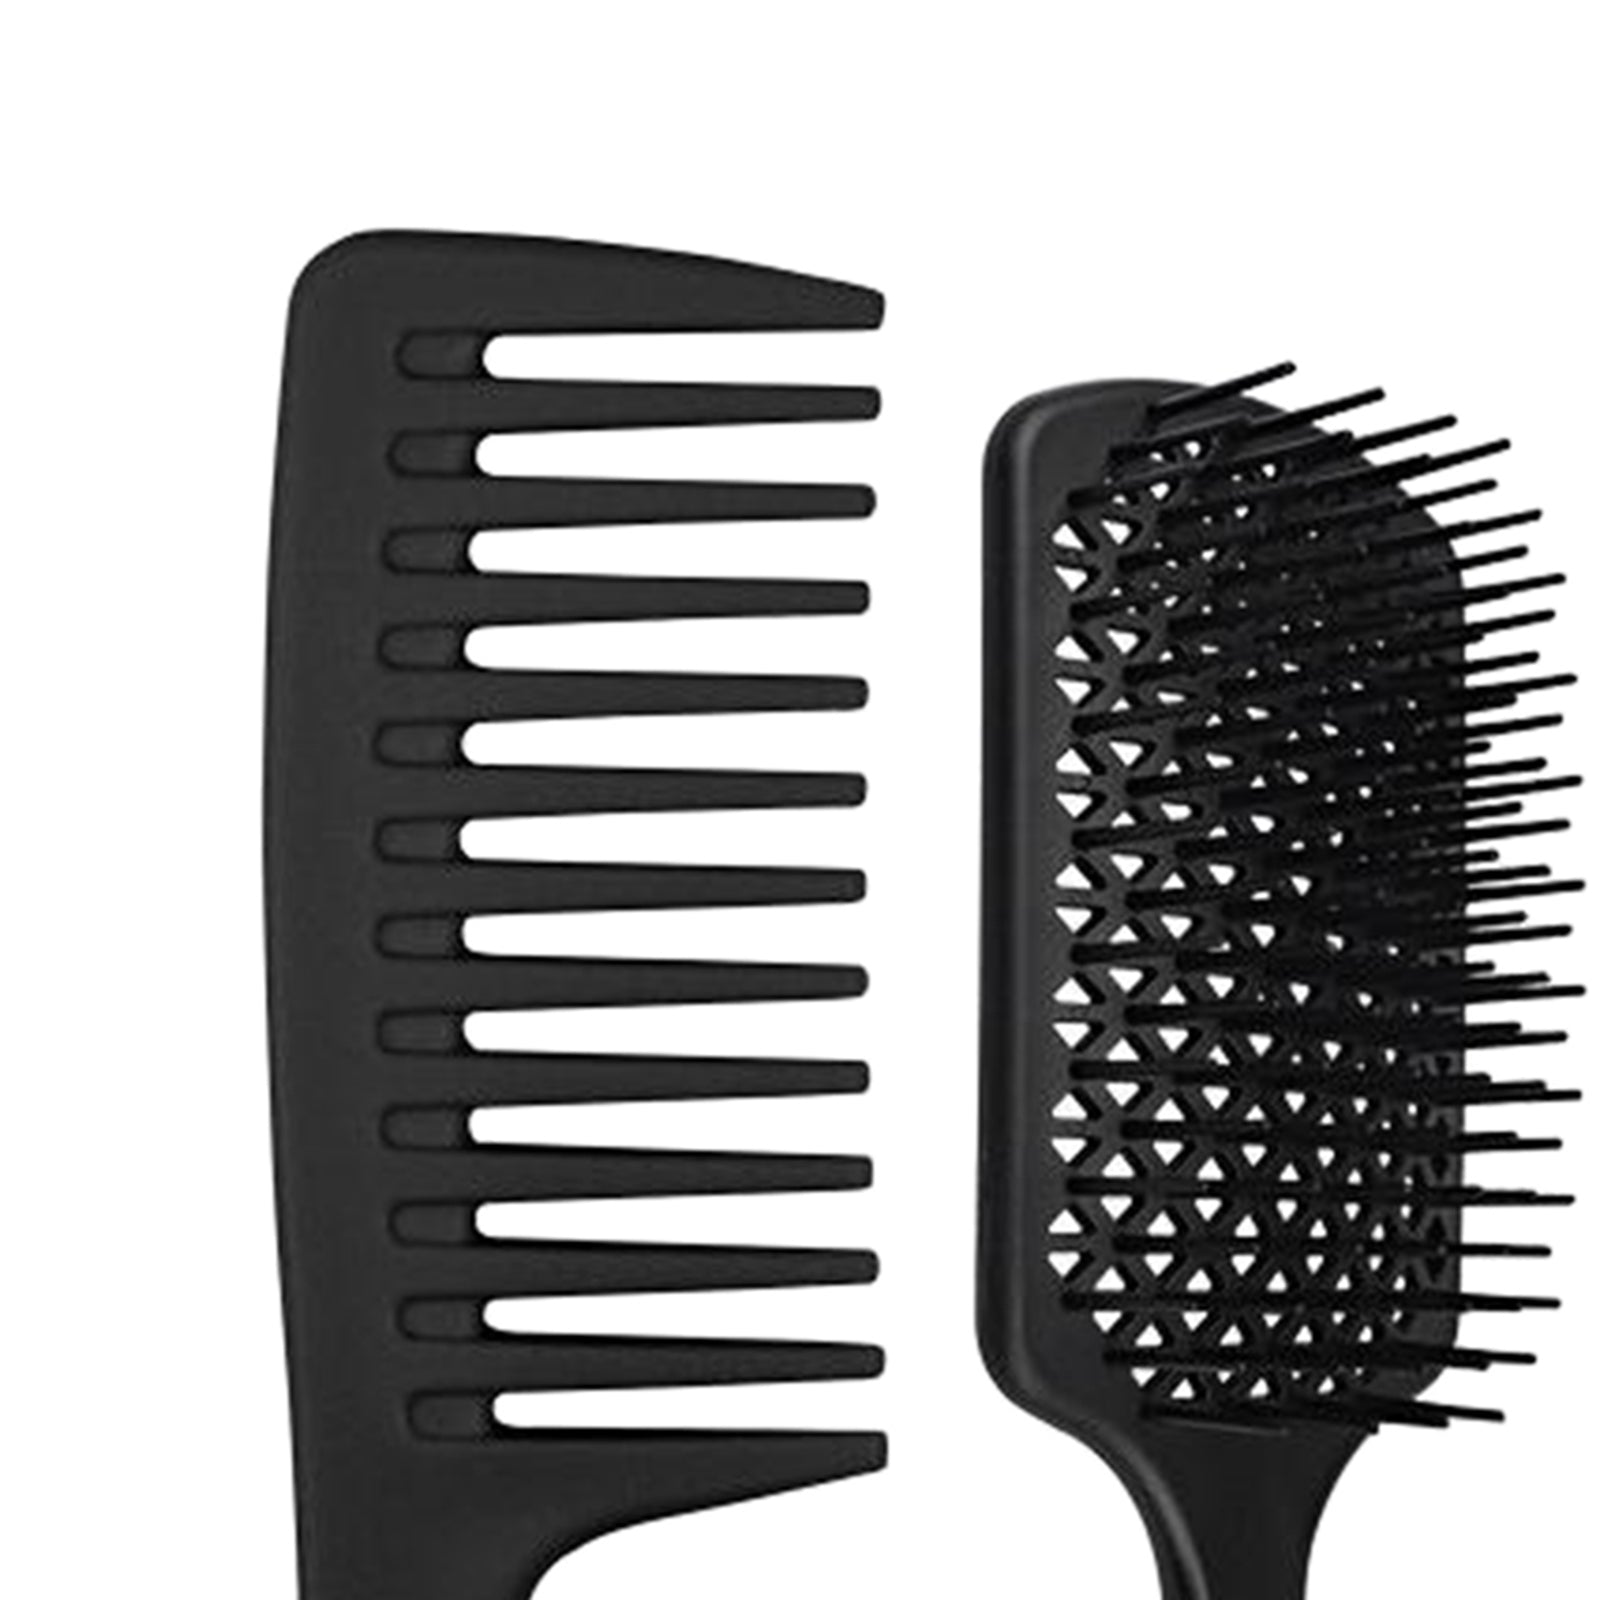 1Set Salon Hair Styling Plastic Barbers Brush Combs Set Black